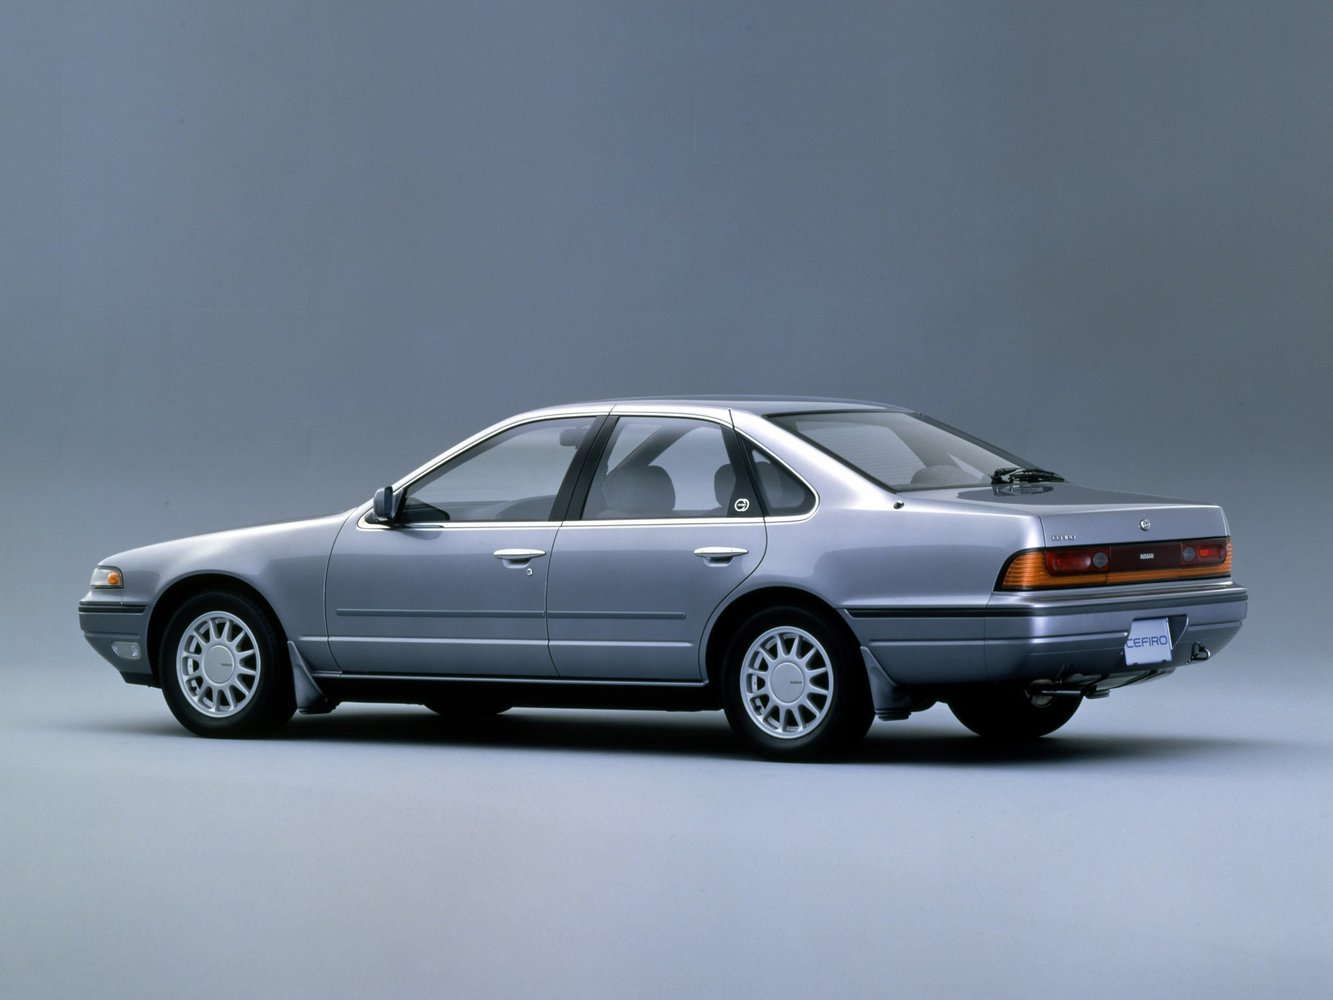 седан Nissan Cefiro 1988 - 1994г выпуска модификация 2.0 AT (125 л.с.)